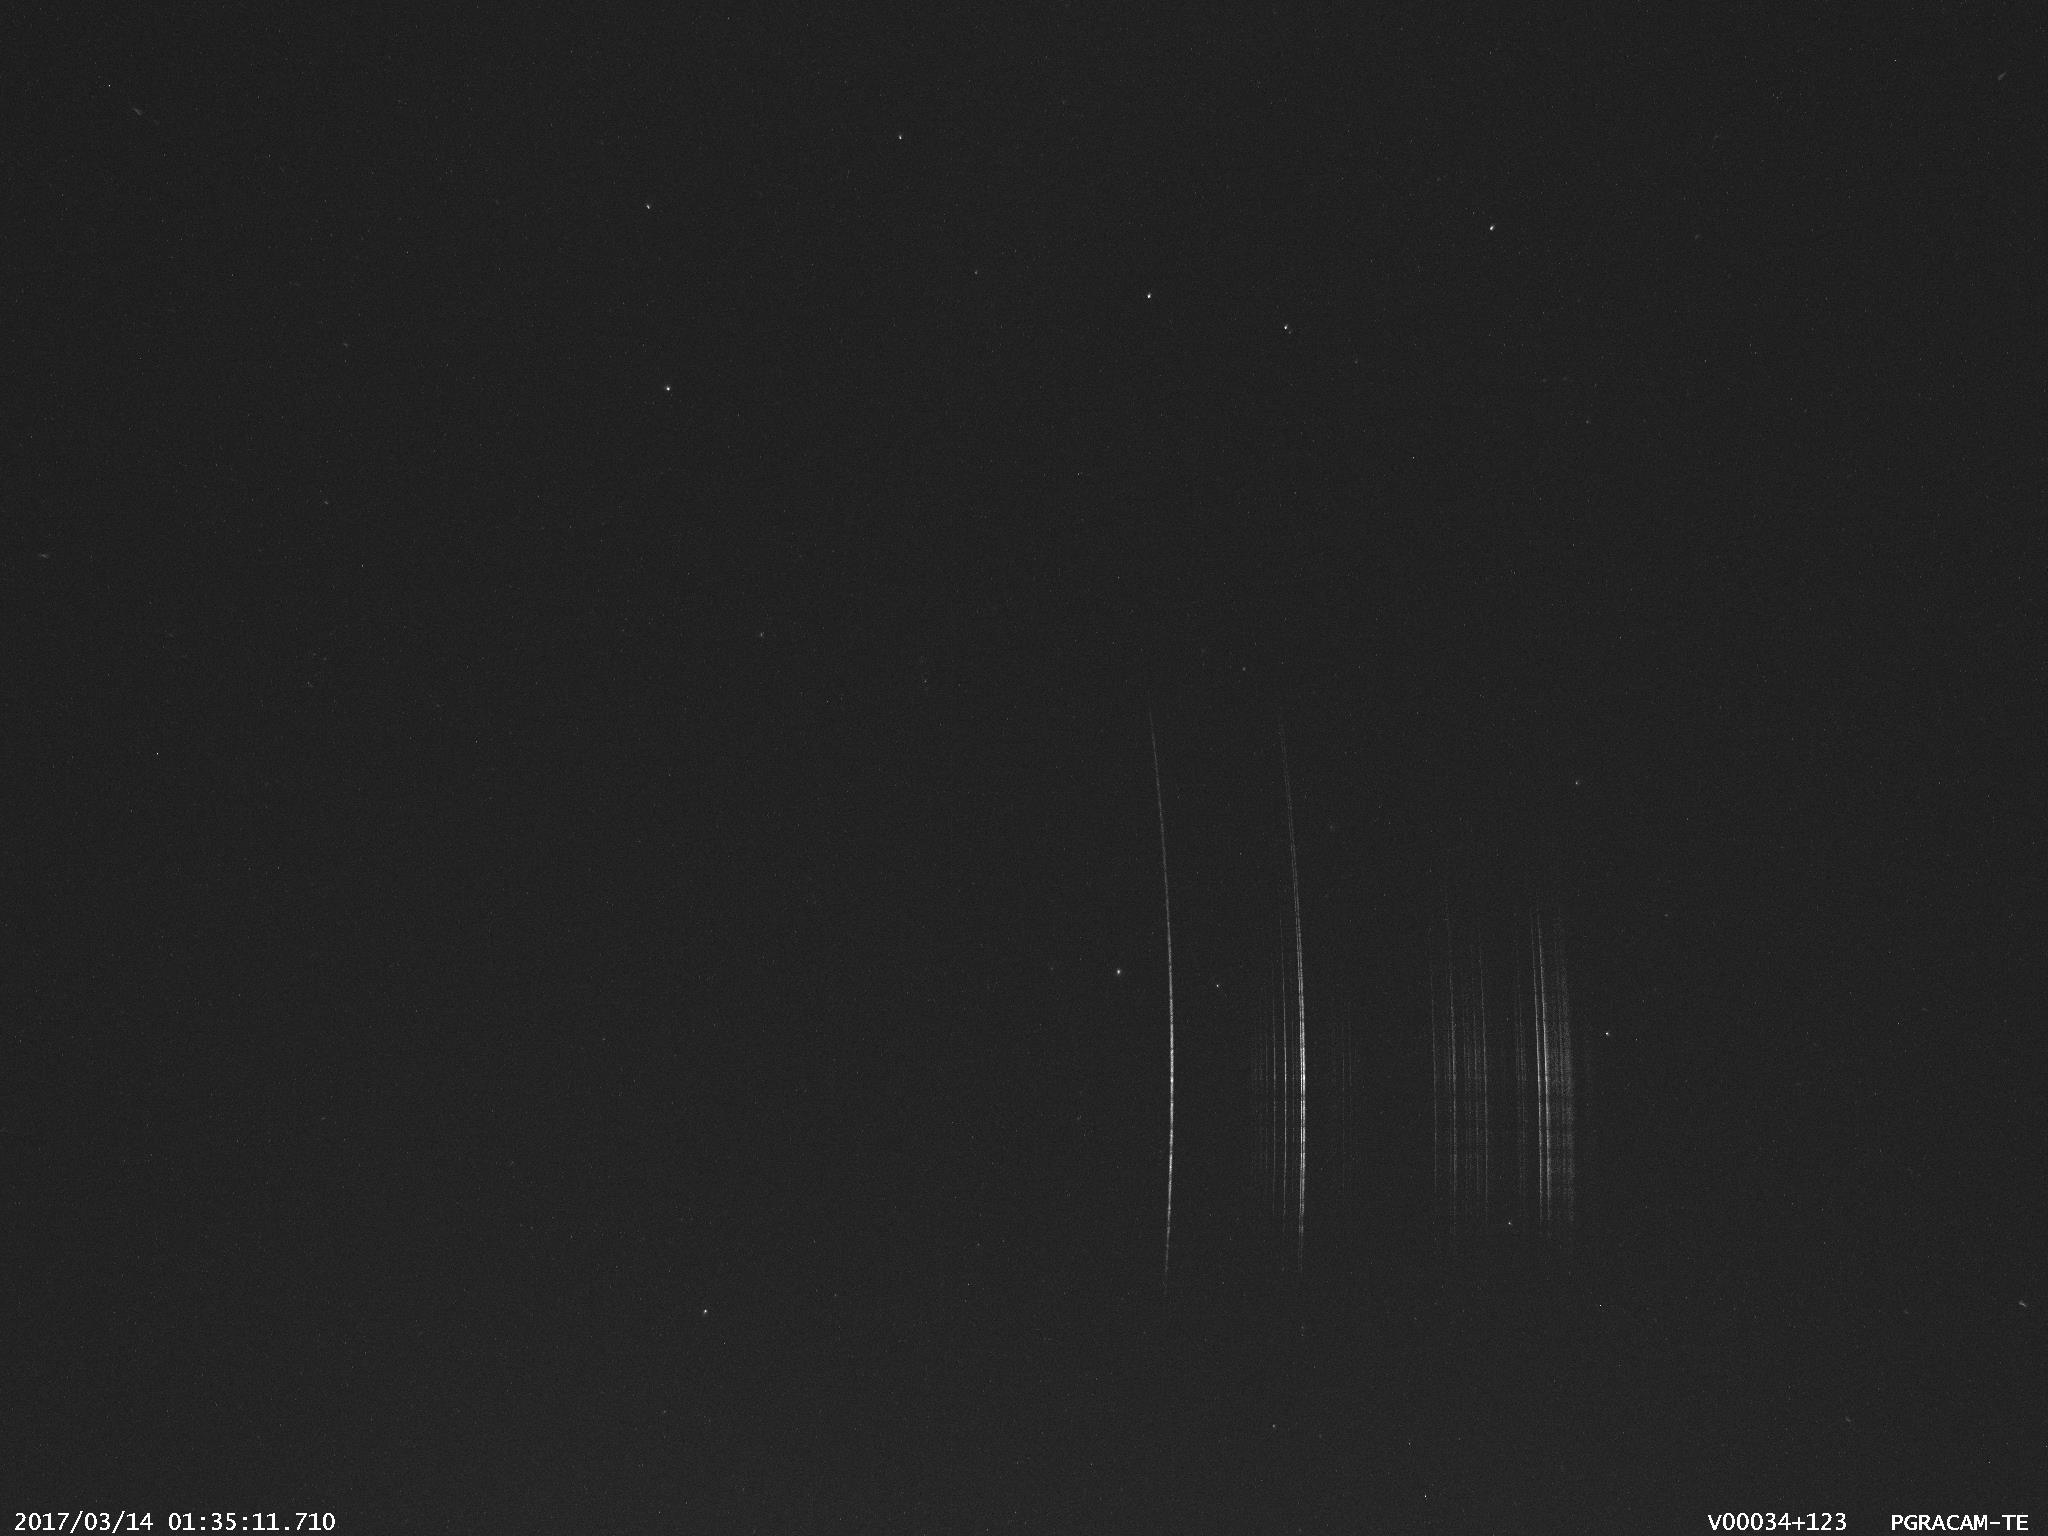 Obr. 14: Spektrum jasného meteoru 20170314_013511, spektrograf PGRACAM-TE. Autor: Hvězdárna Valašské Meziříčí